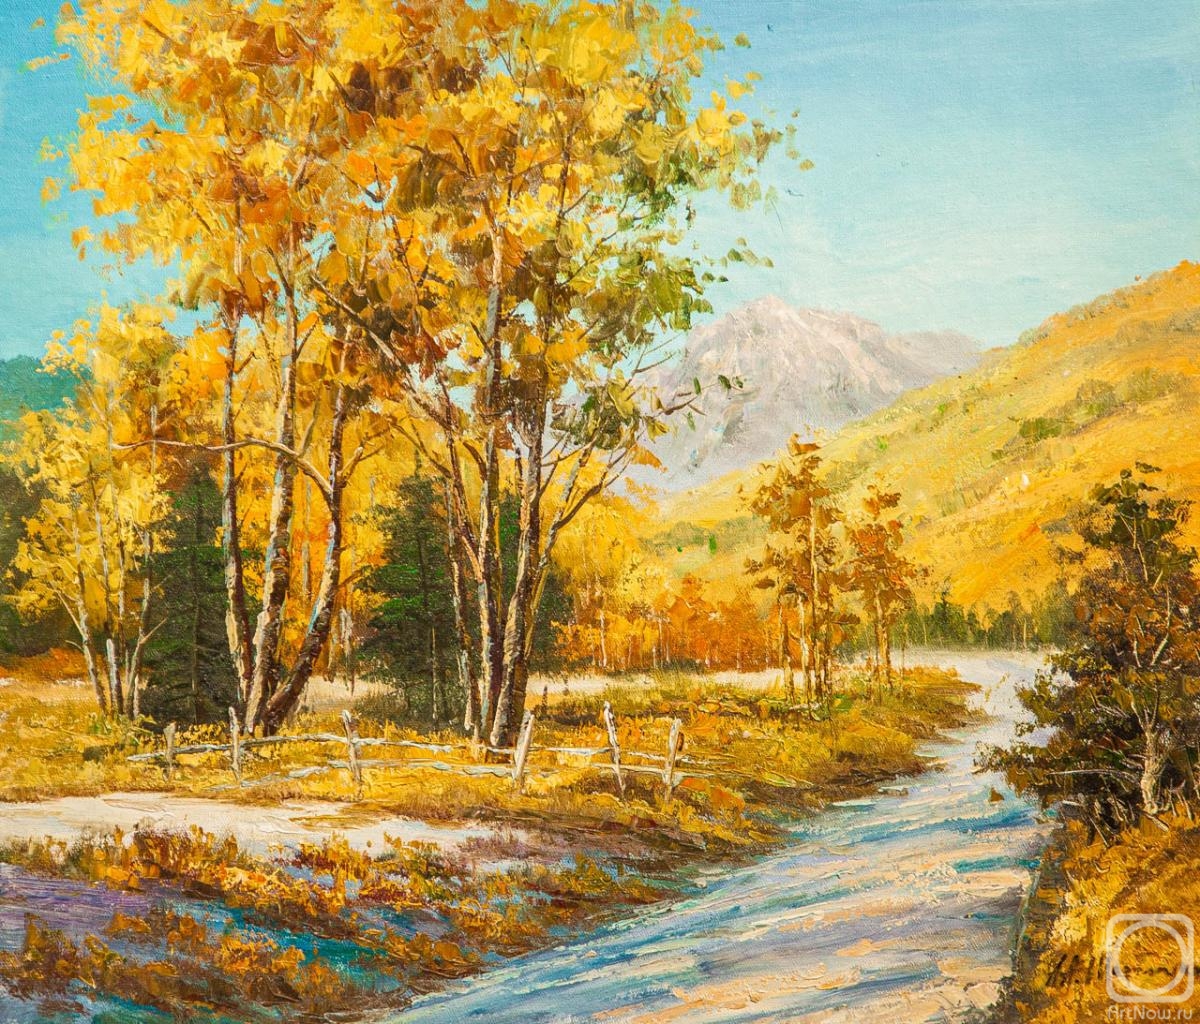 Sharabarin Andrey. Golden autumn in the mountains